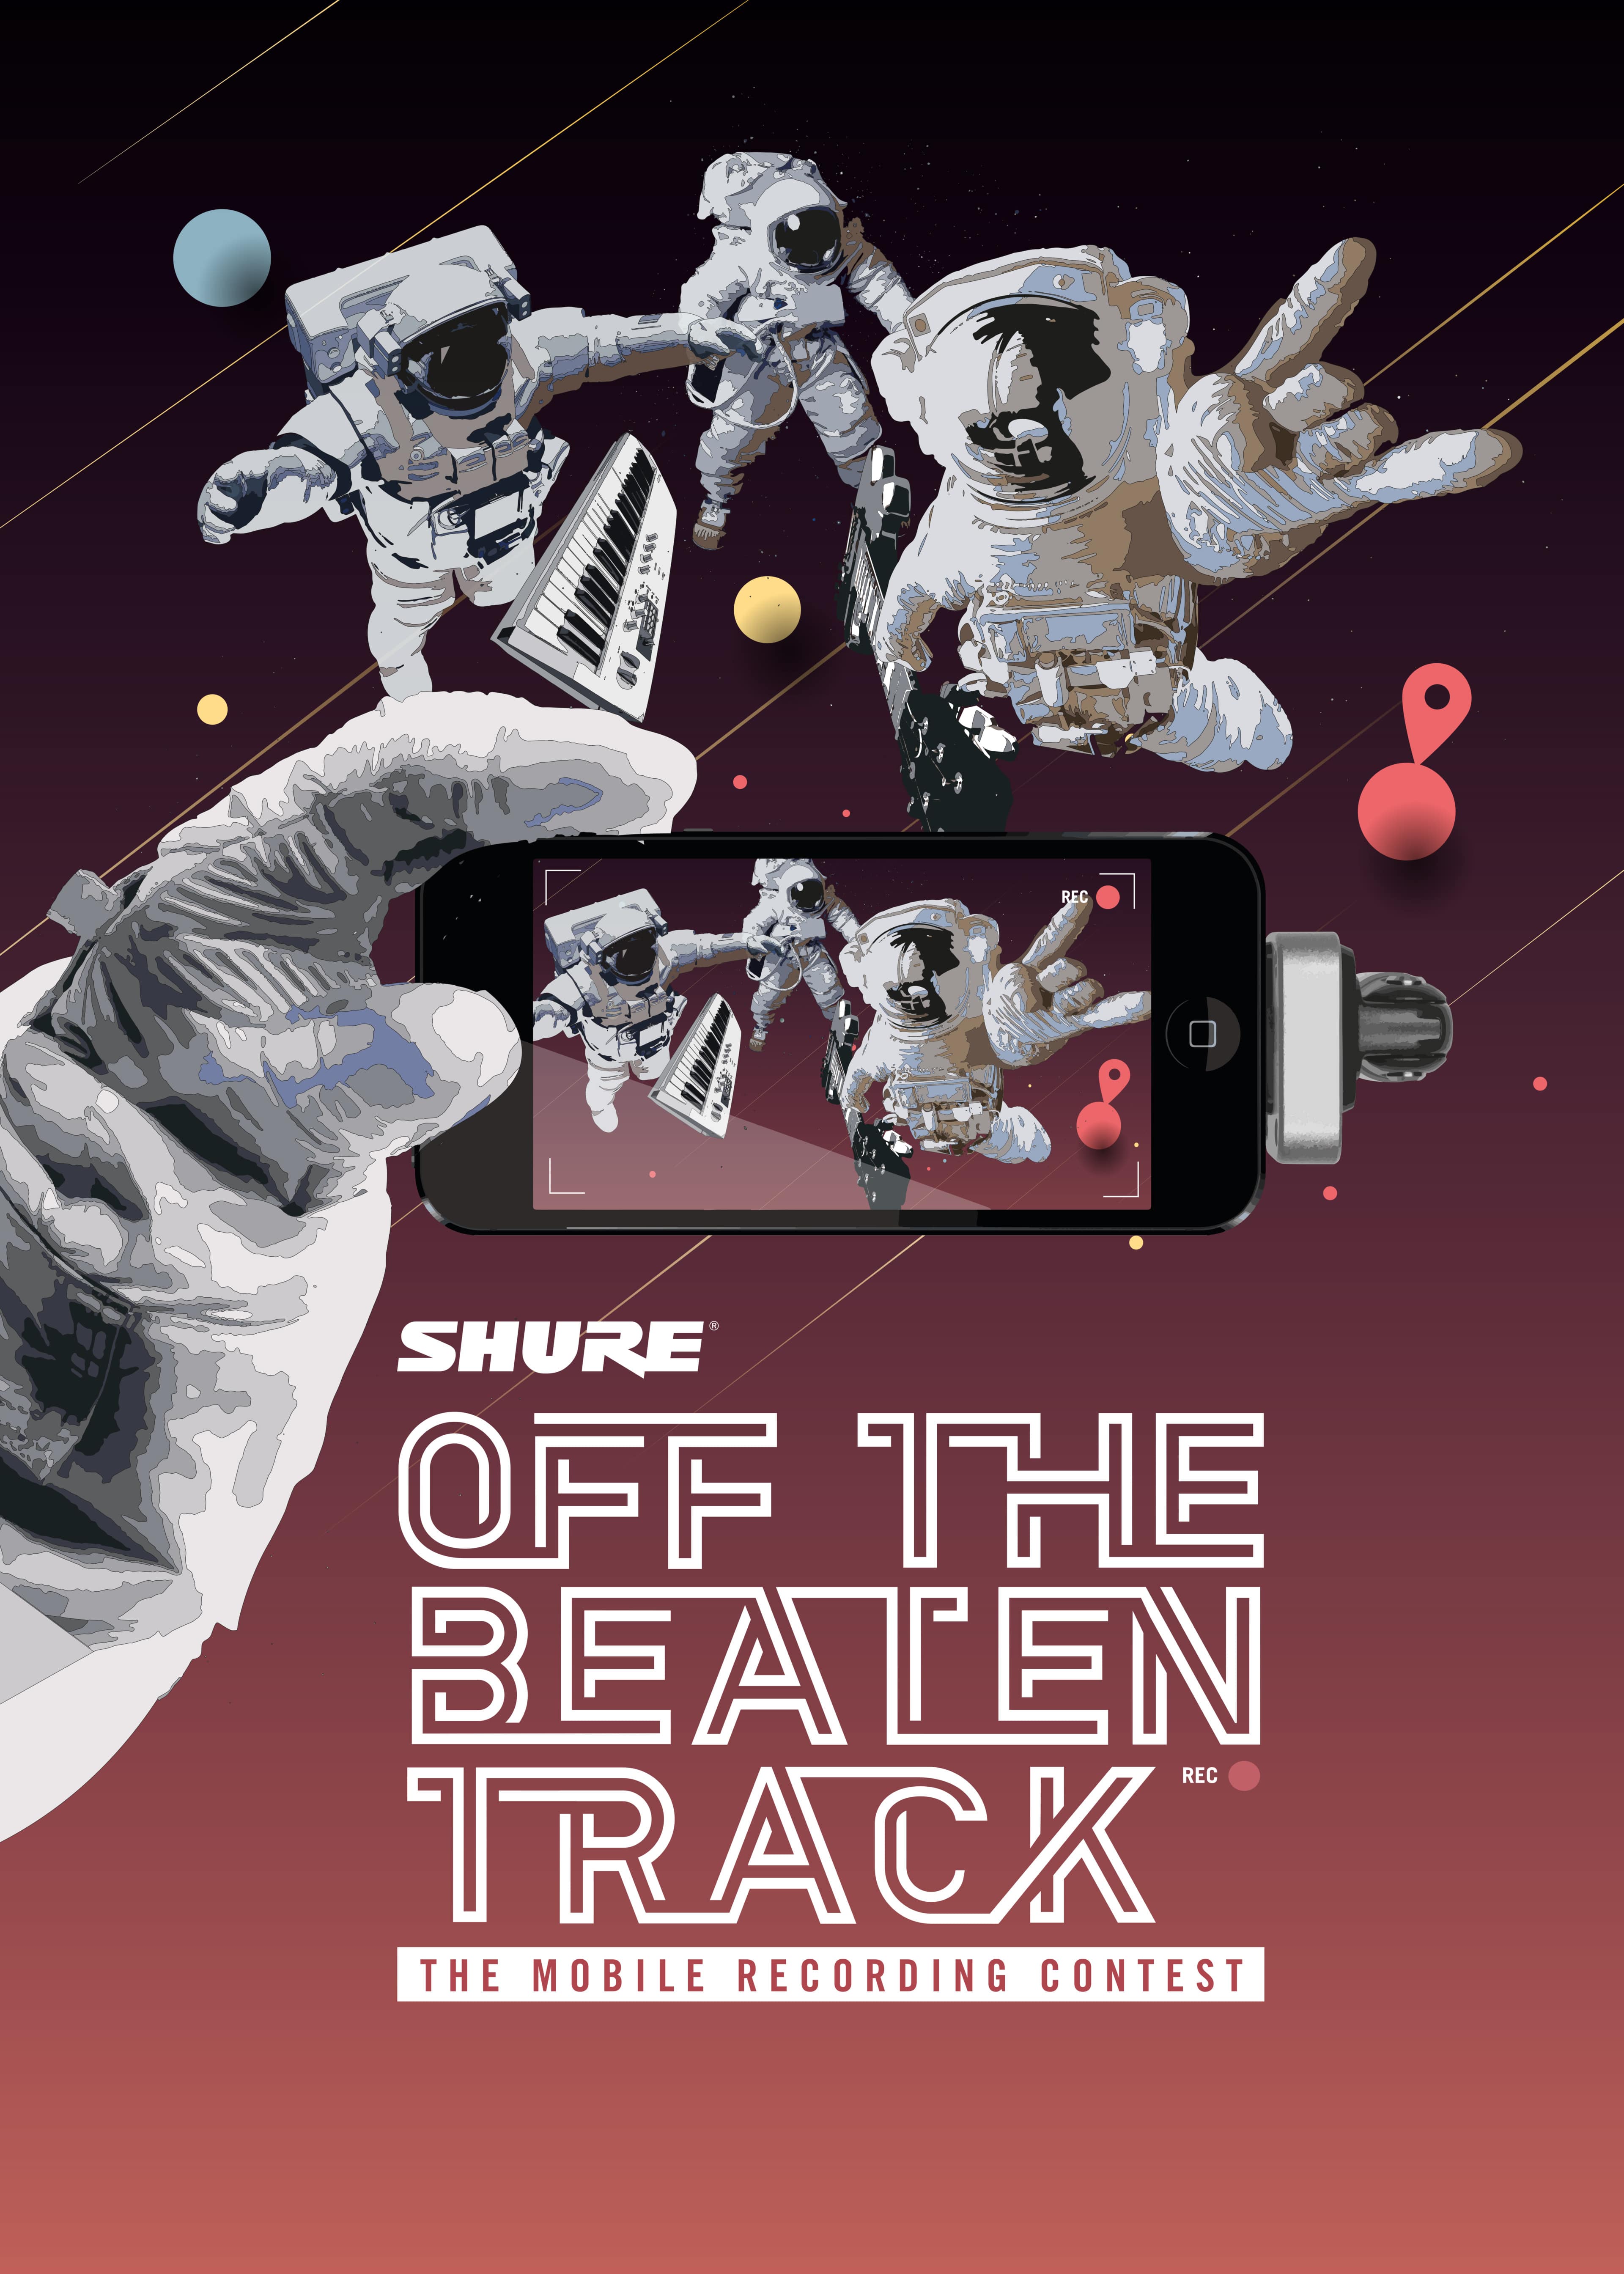 Shure Announces Mobile Recording Contest ‘Off the Beaten Track’